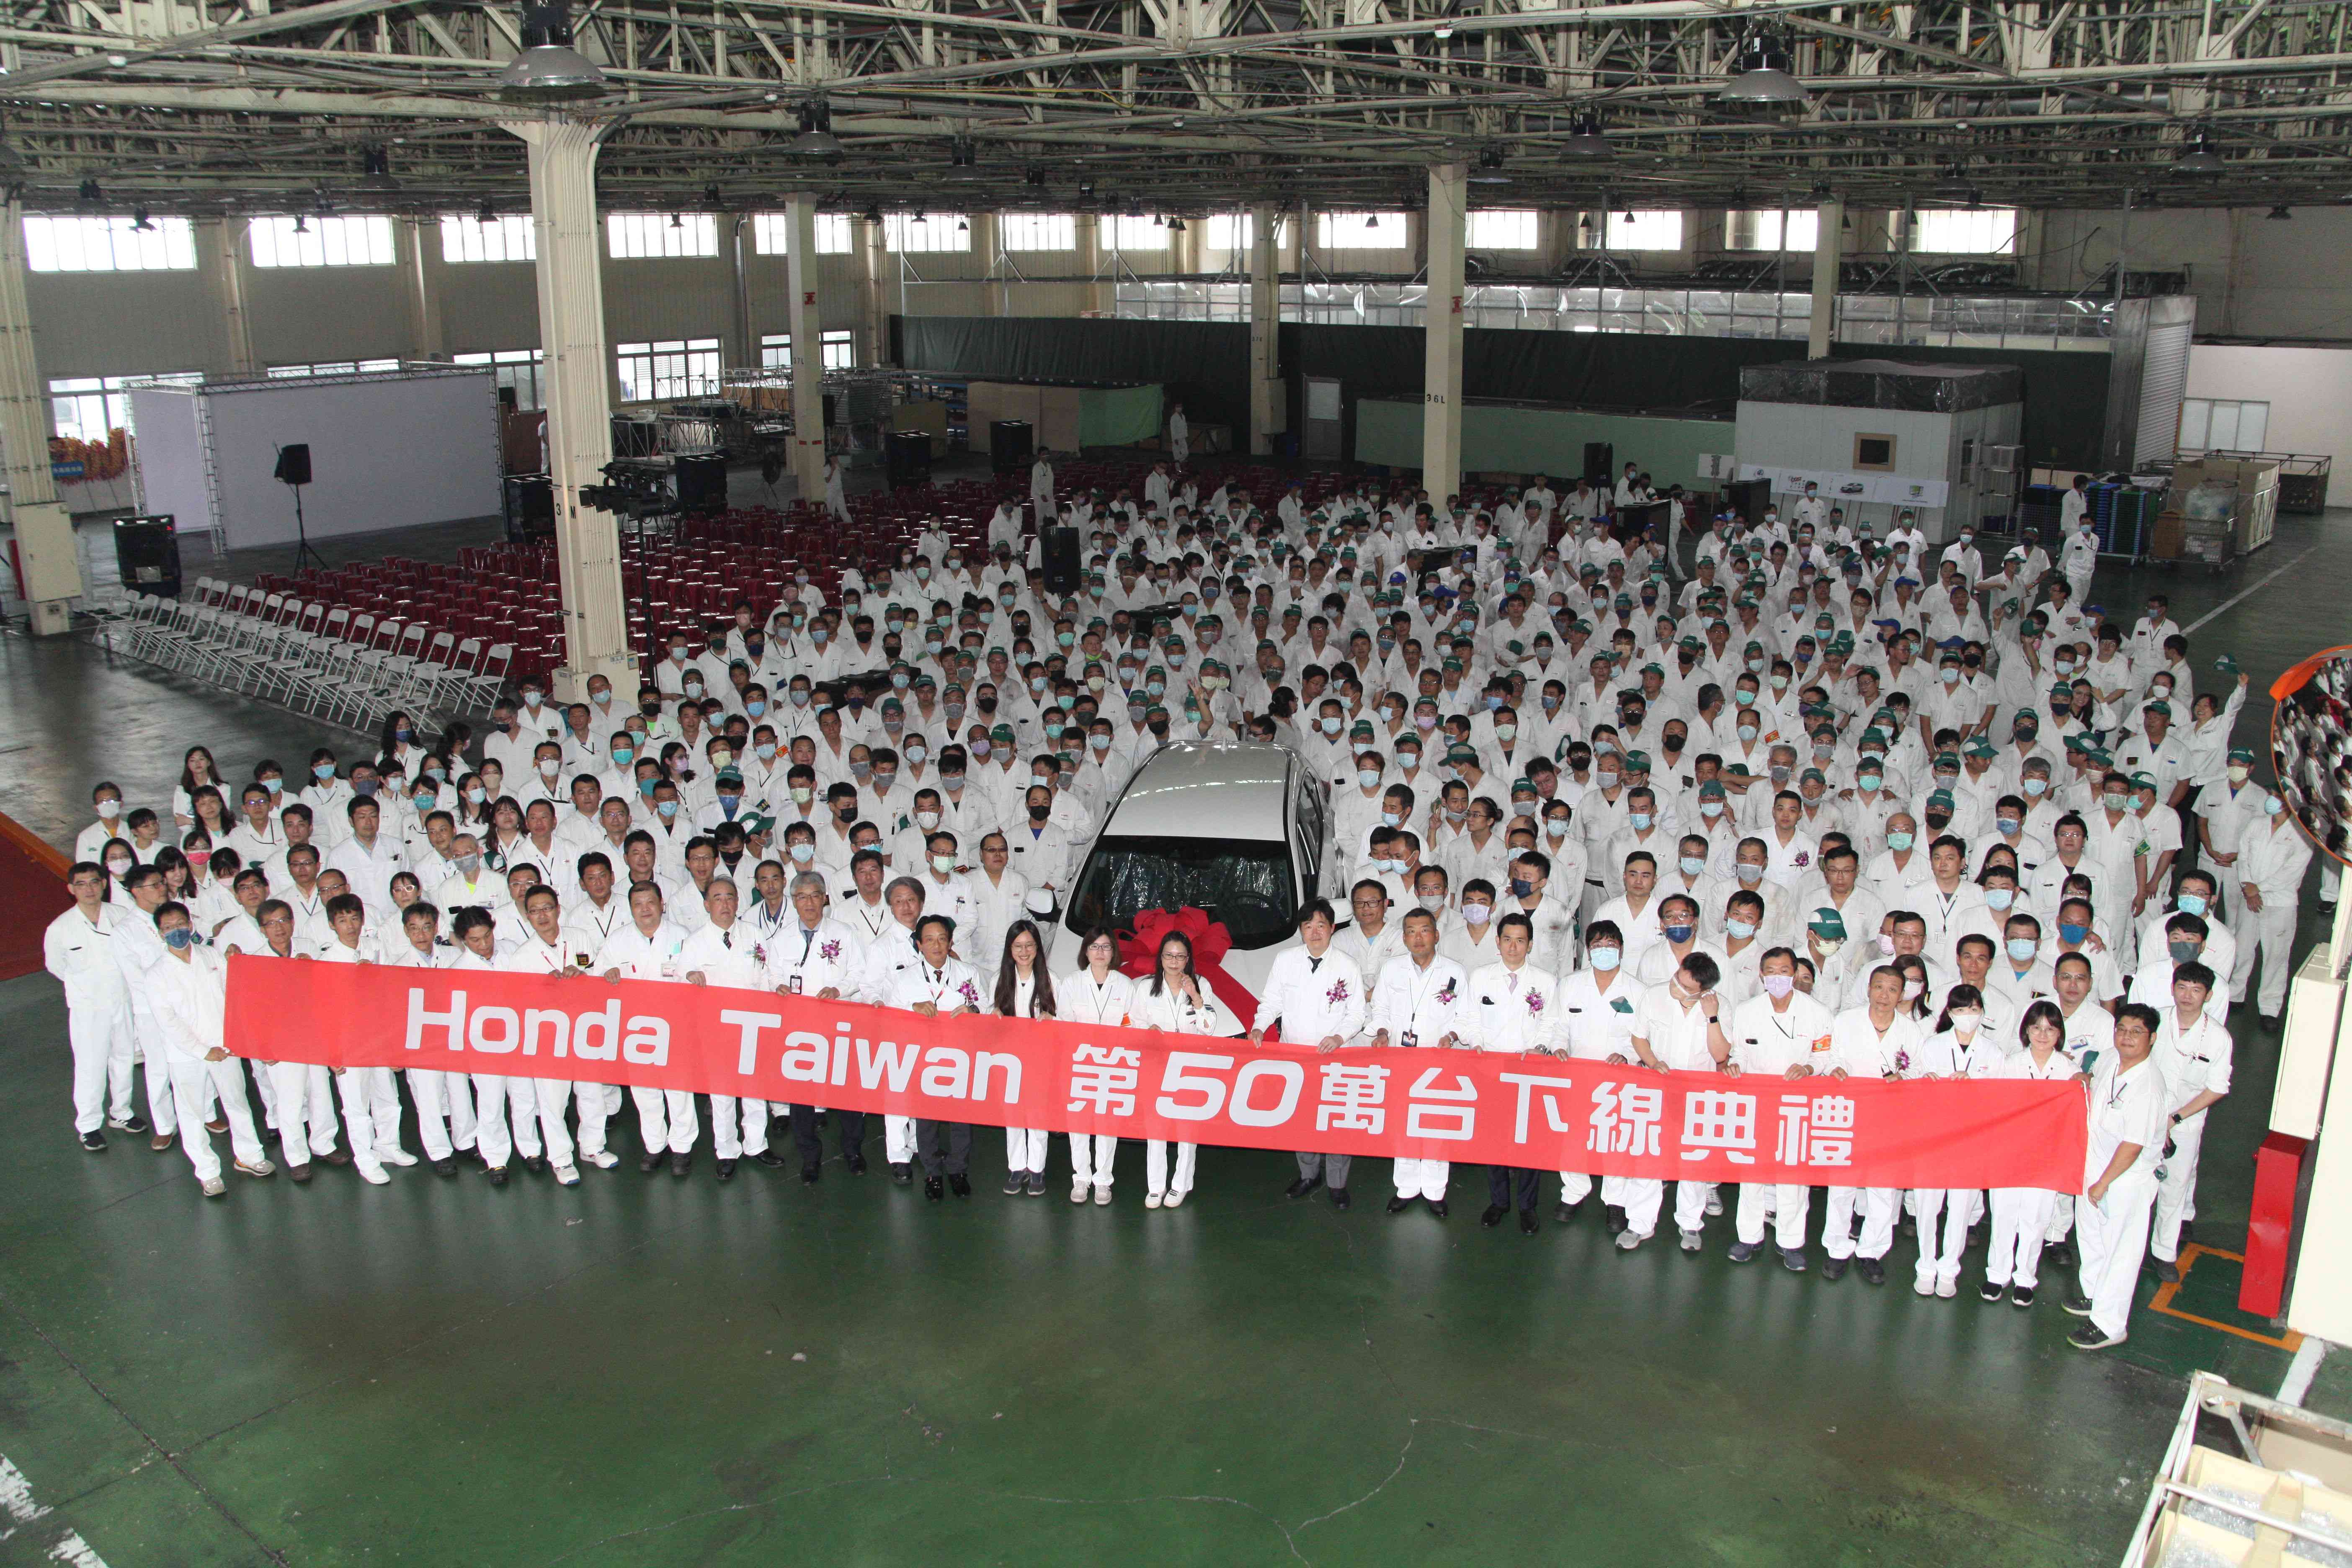 Honda Taiwan達成50萬台生產里程碑歡慶榮耀六月入主全車系享5年延長保固，CR-V再享雙重好禮